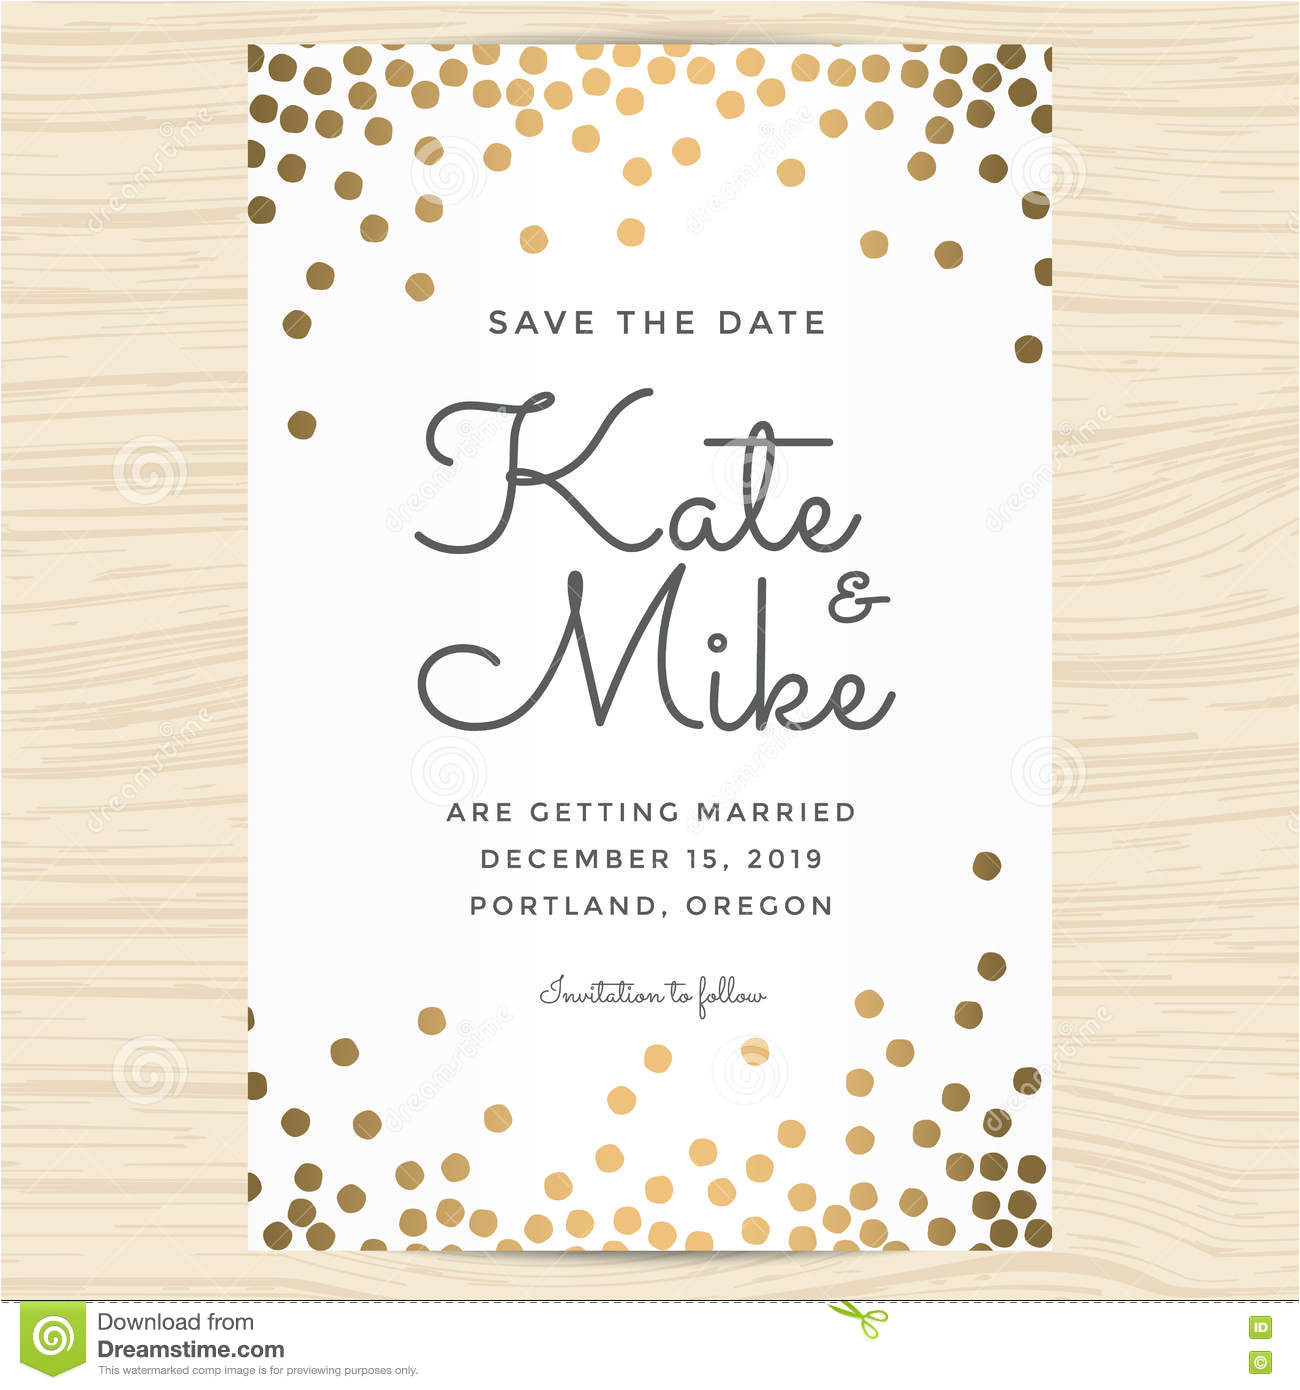 stock illustration save date wedding invitation card template golden color circle background vector illustration image76355912